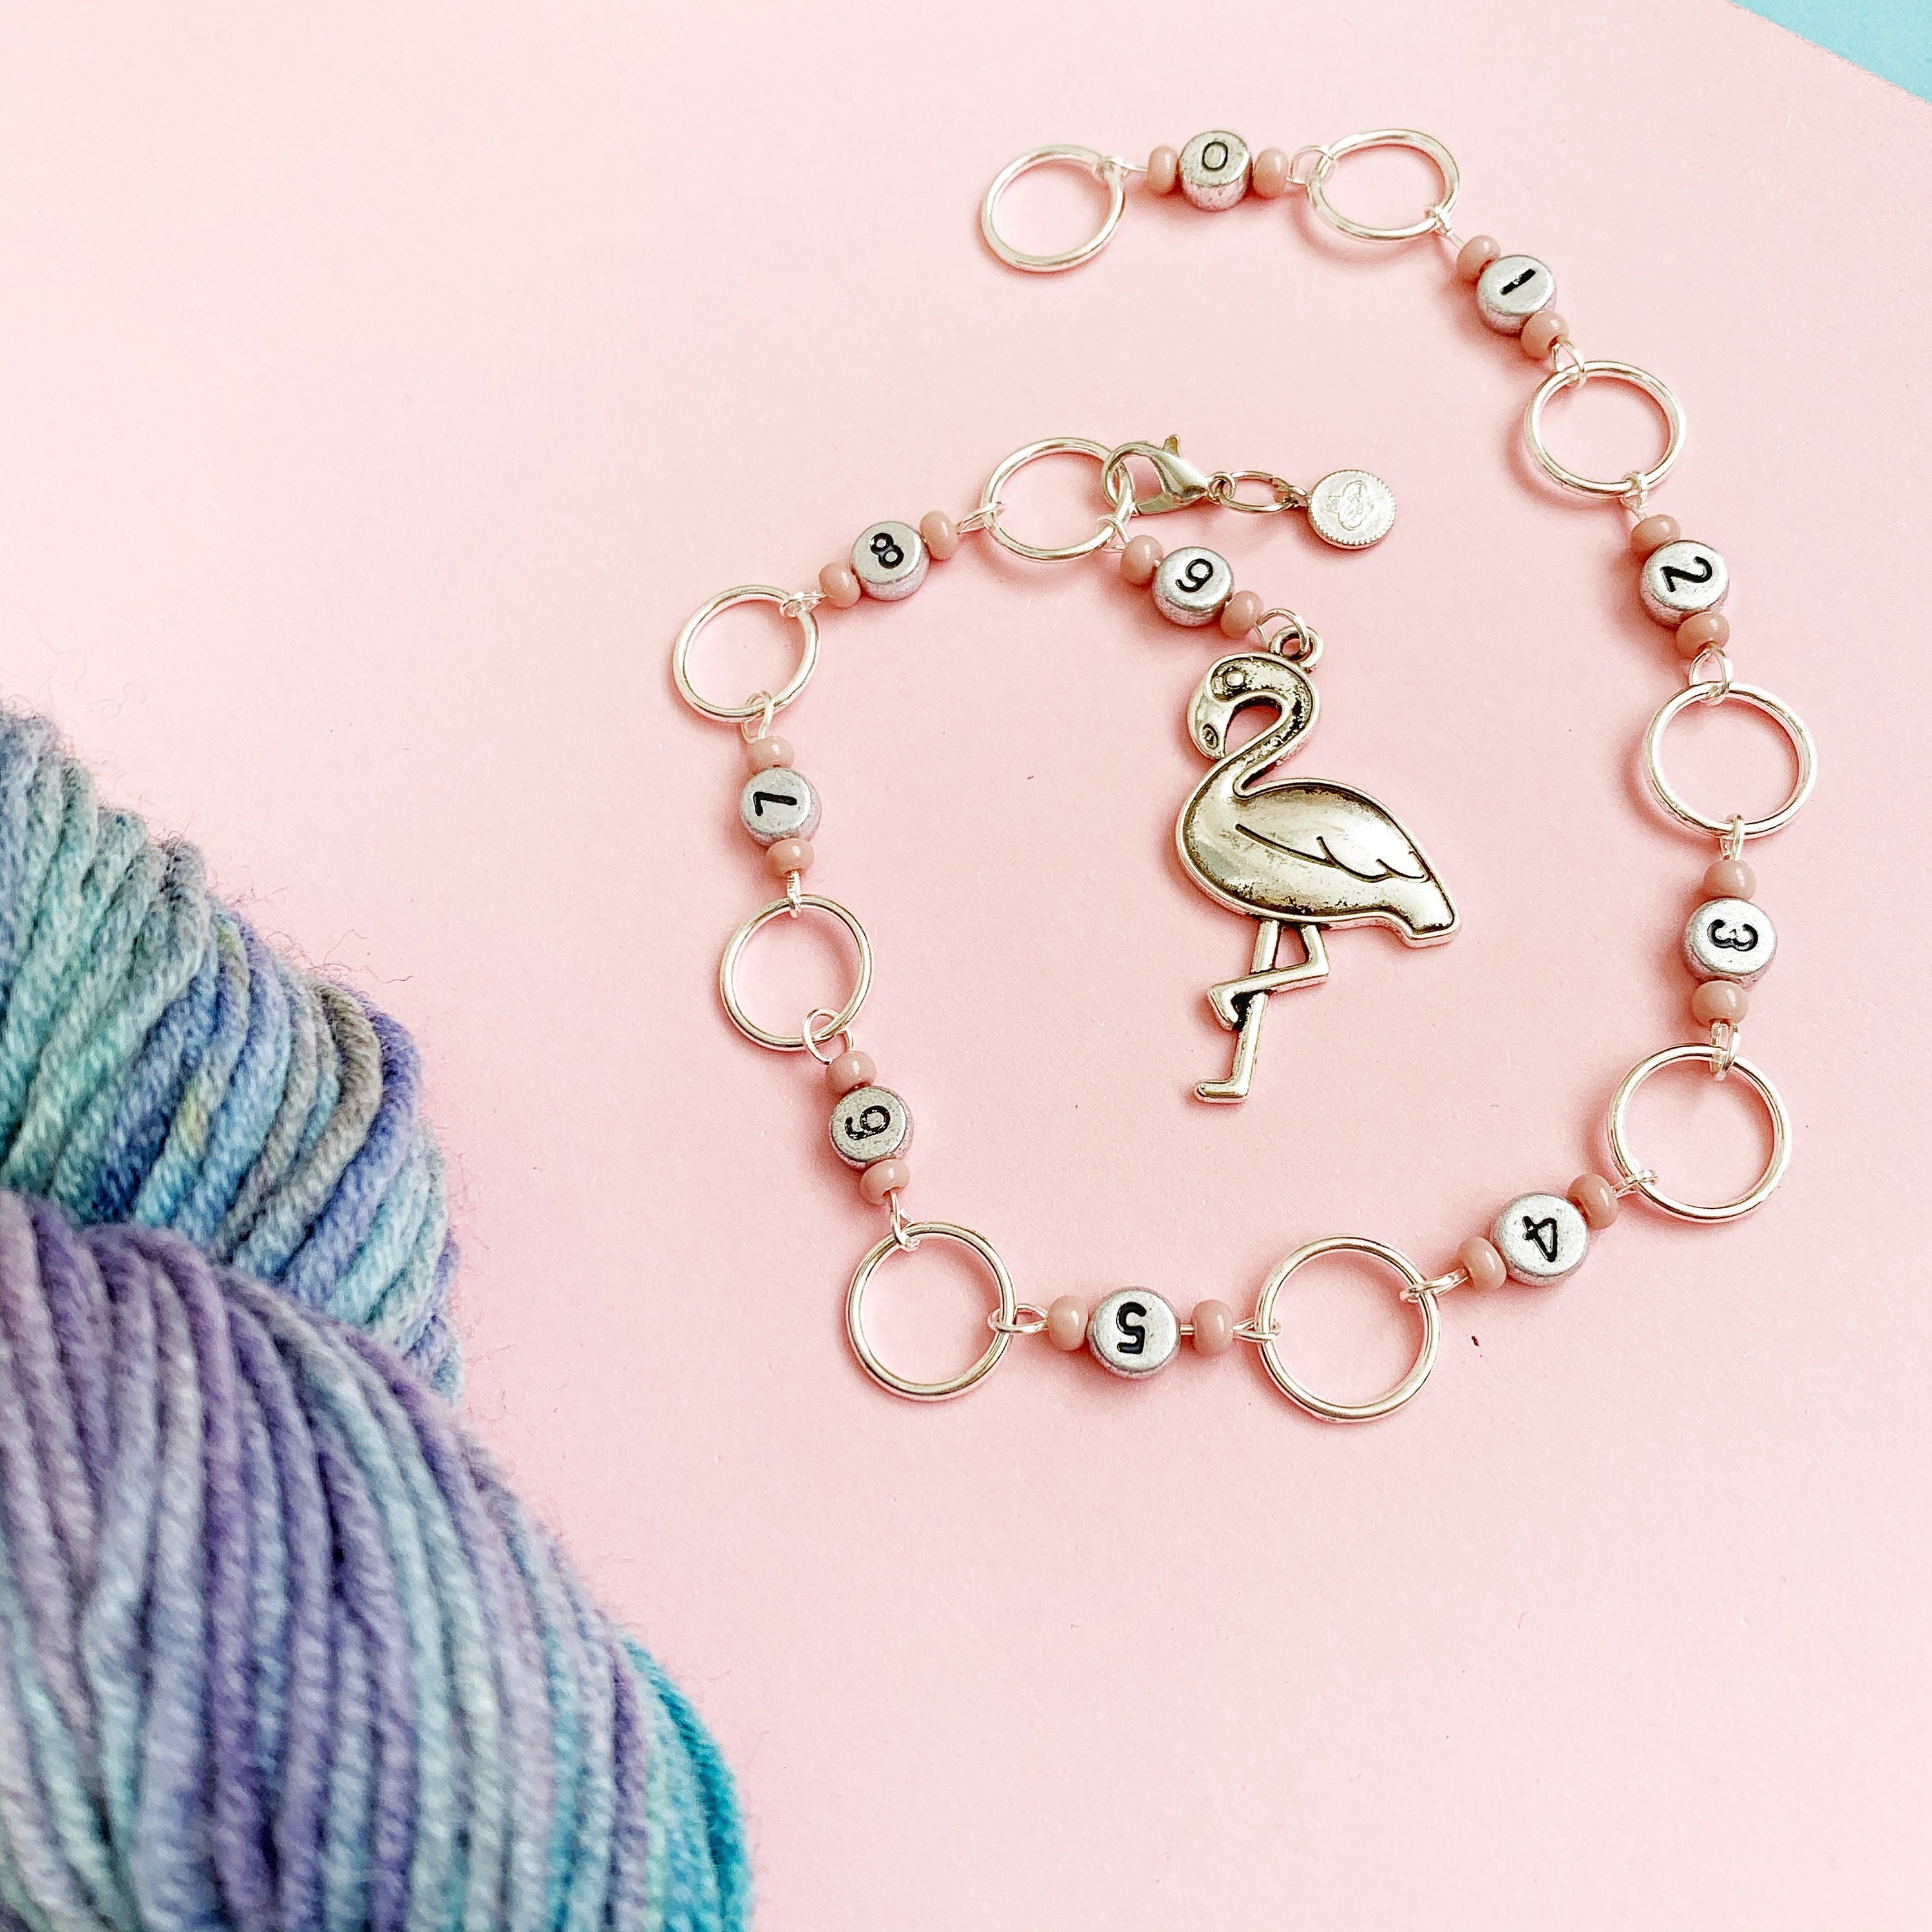 Flamingo Knitting Row Counter , Chain For Knitting